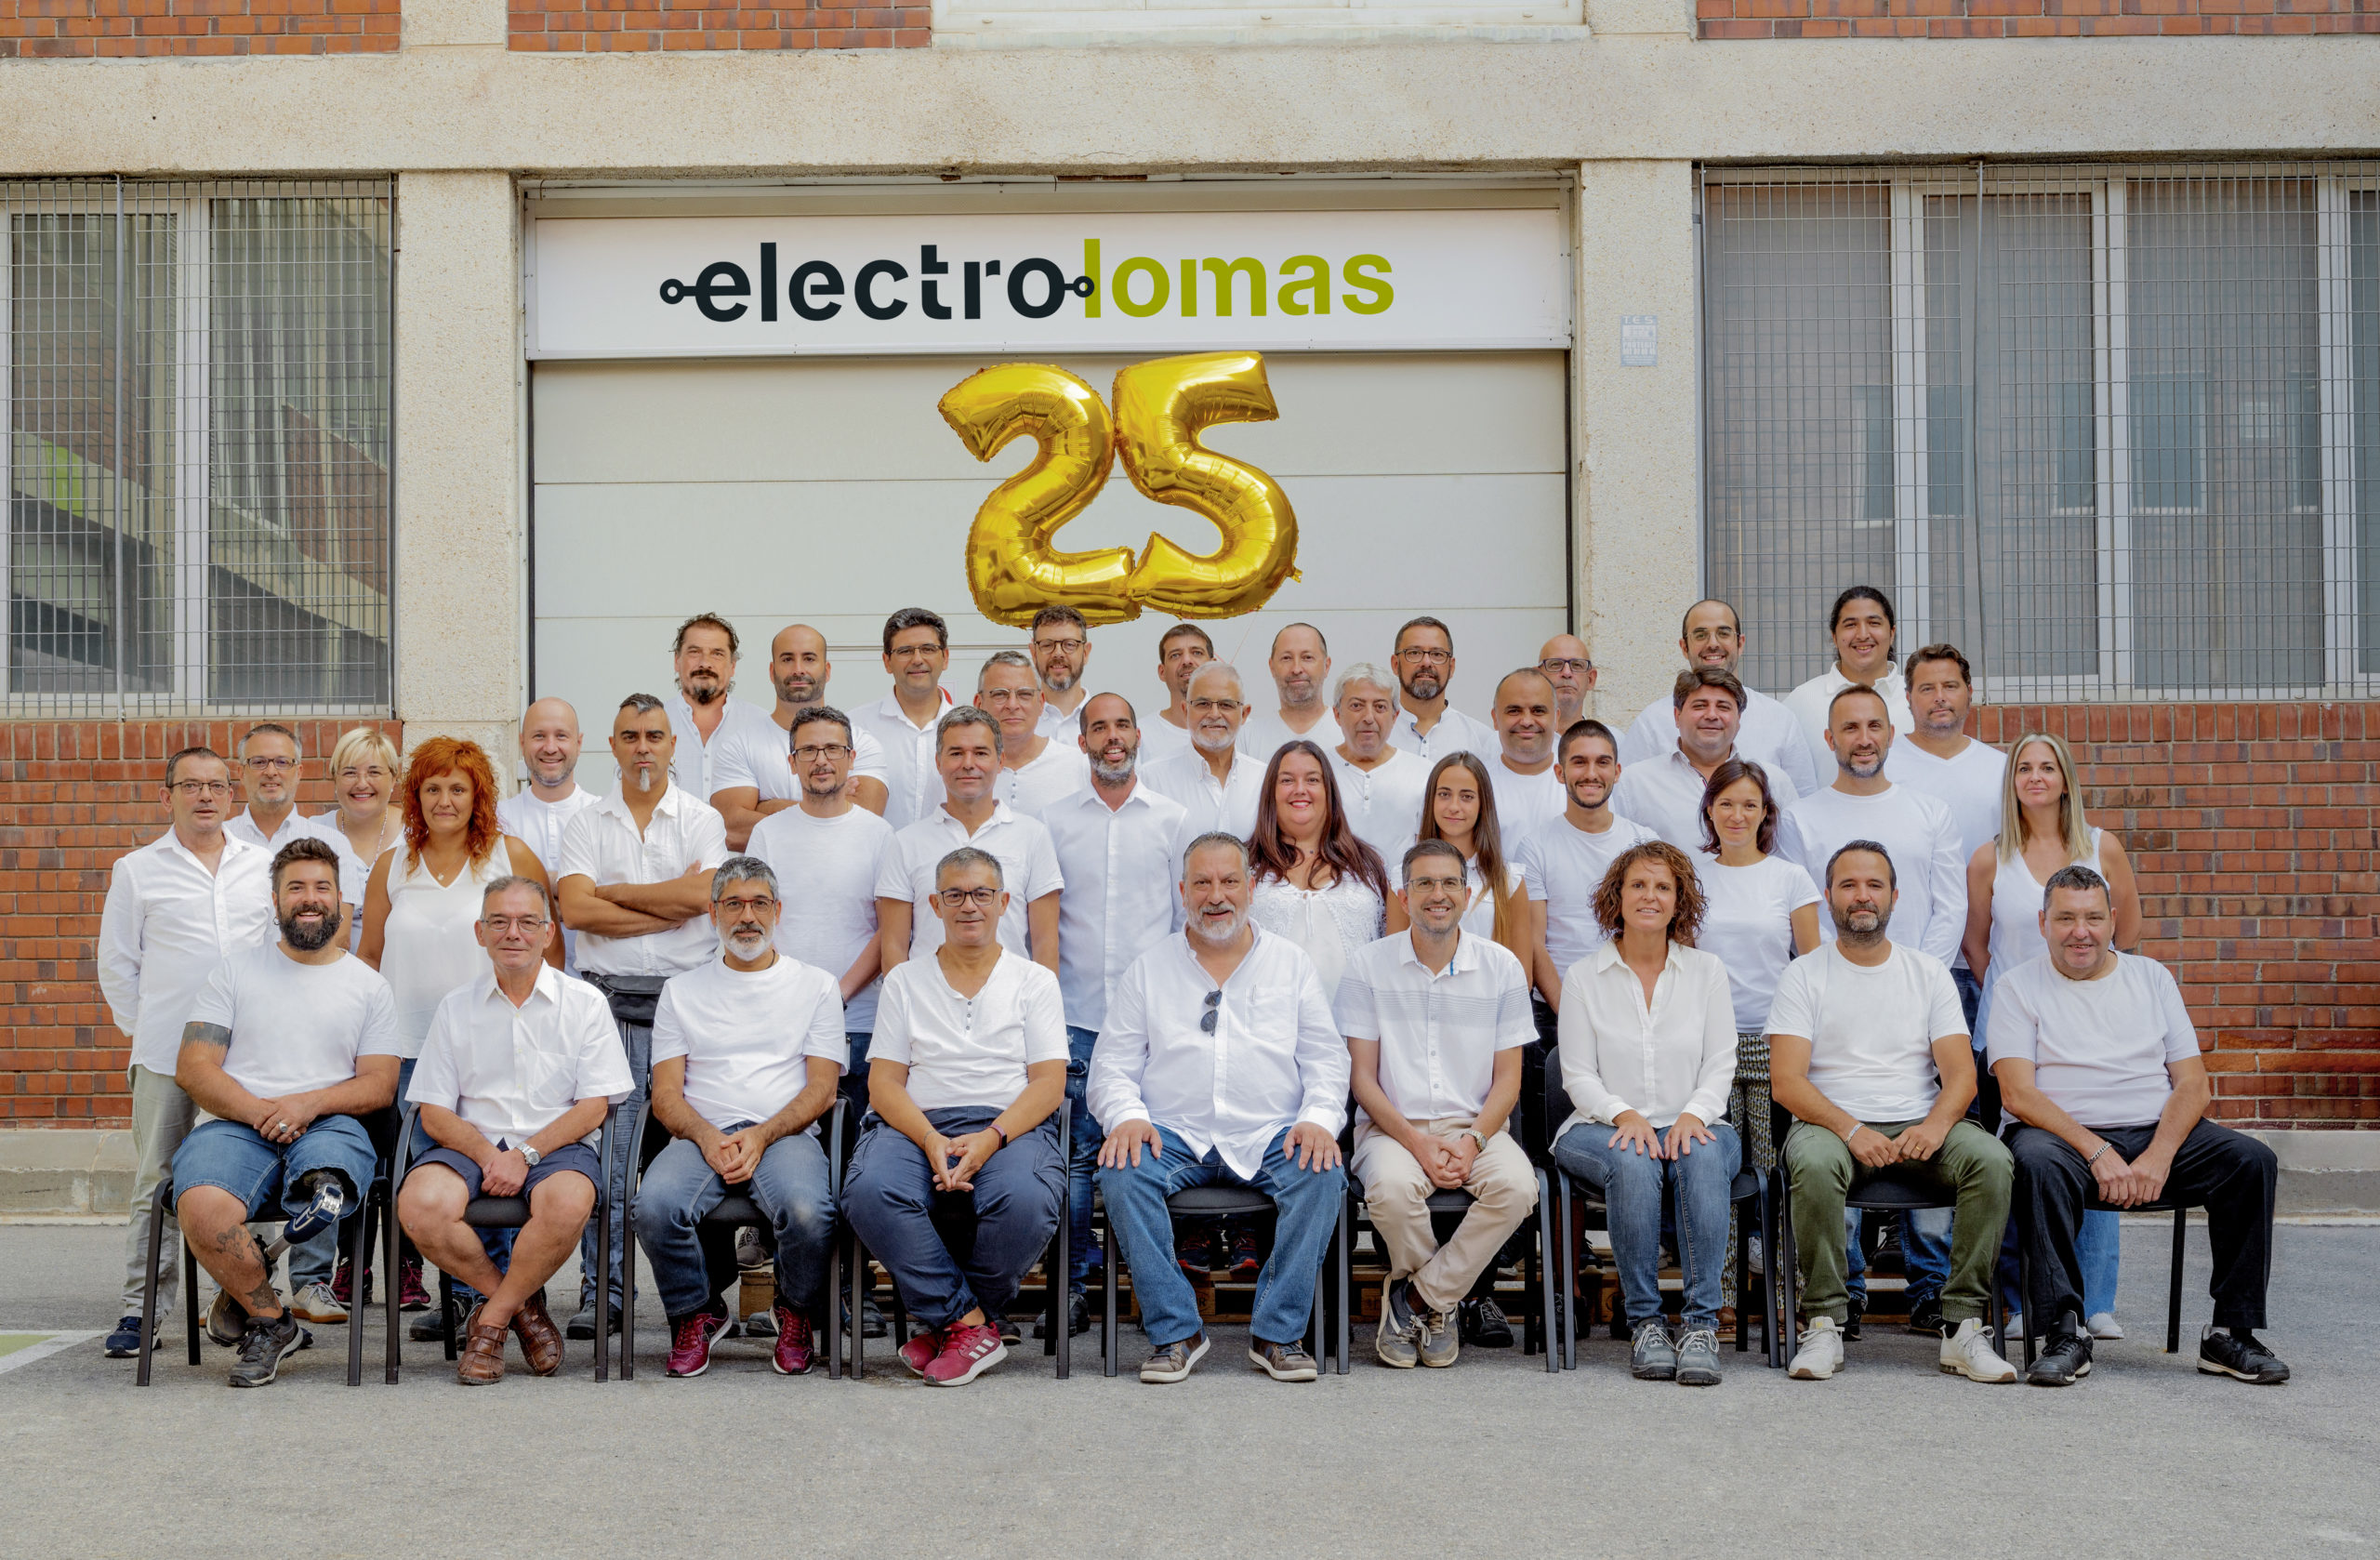 Electrolomas Celebrates Its 25th Anniversary!